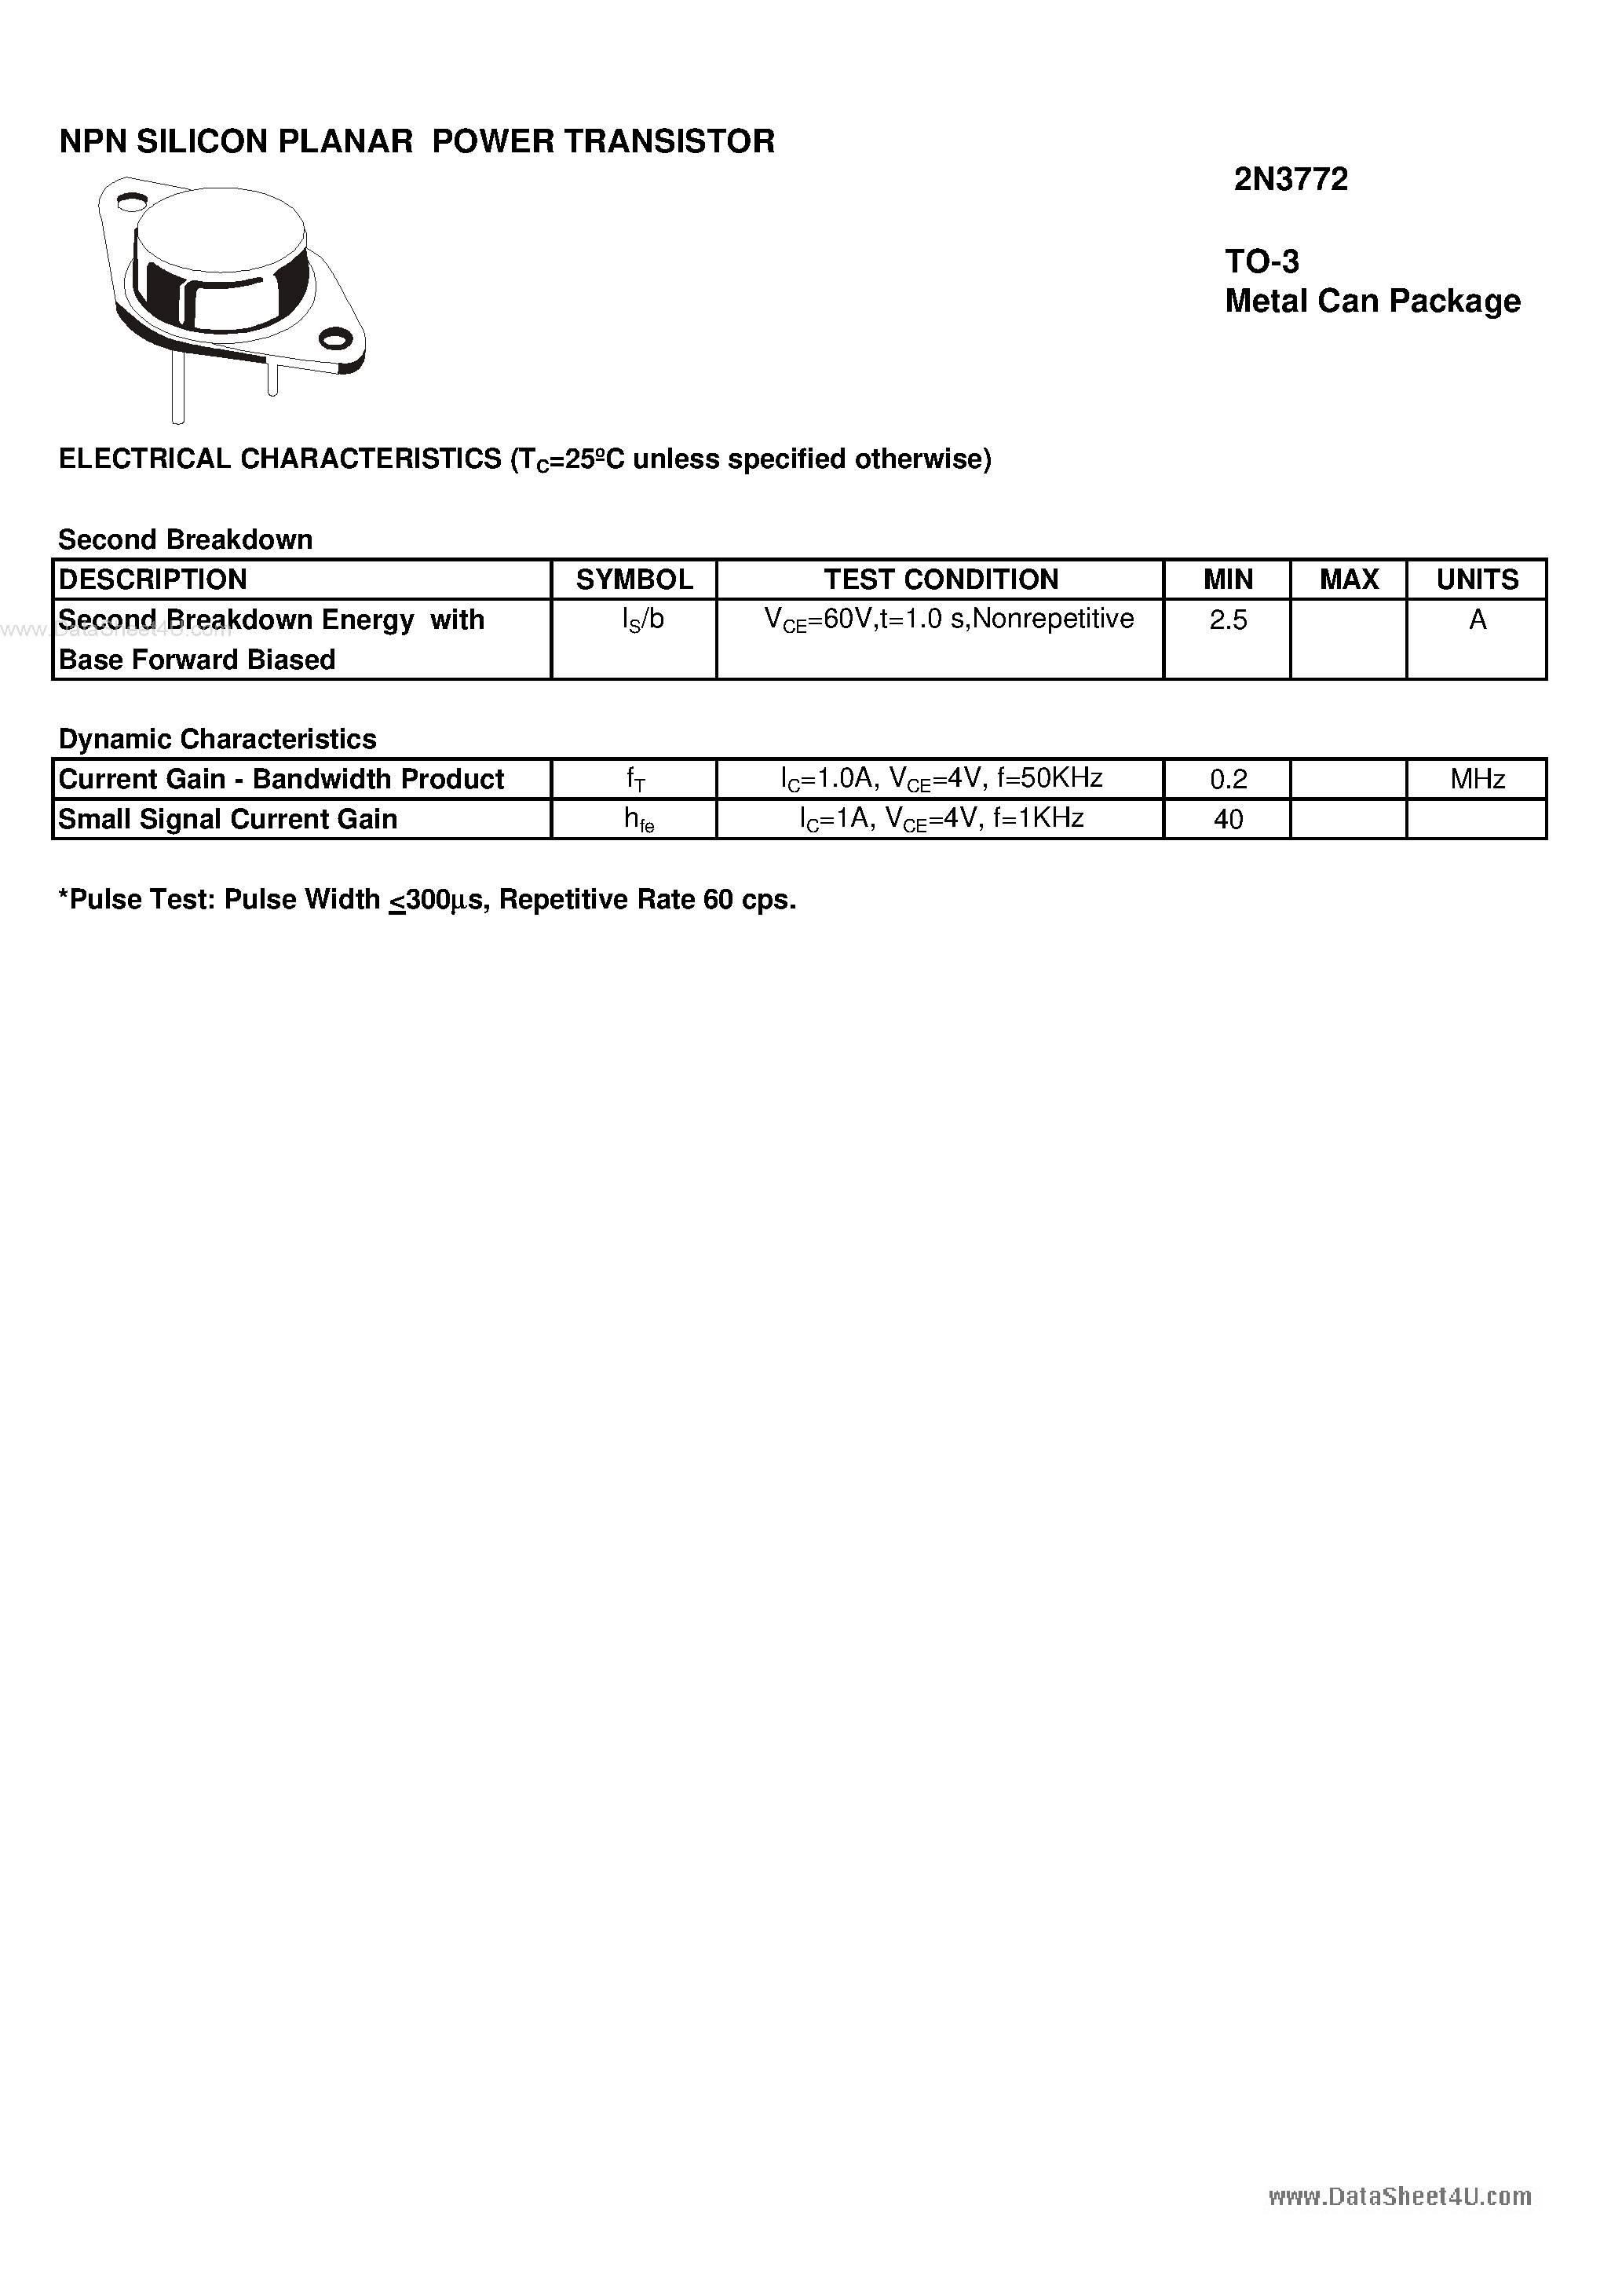 Datasheet 2N3772 - NPN SILICON PLANAR POWER TRANSISTOR page 2